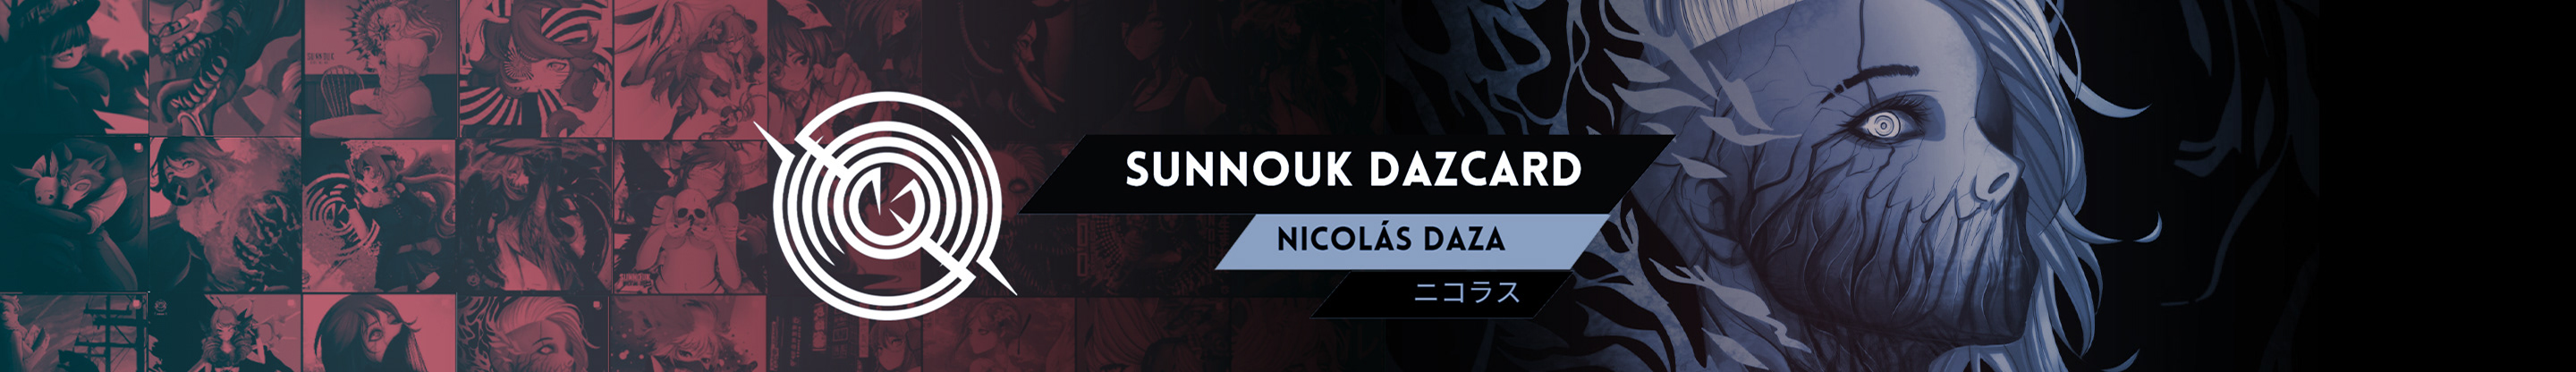 Nicolás Daza profil başlığı